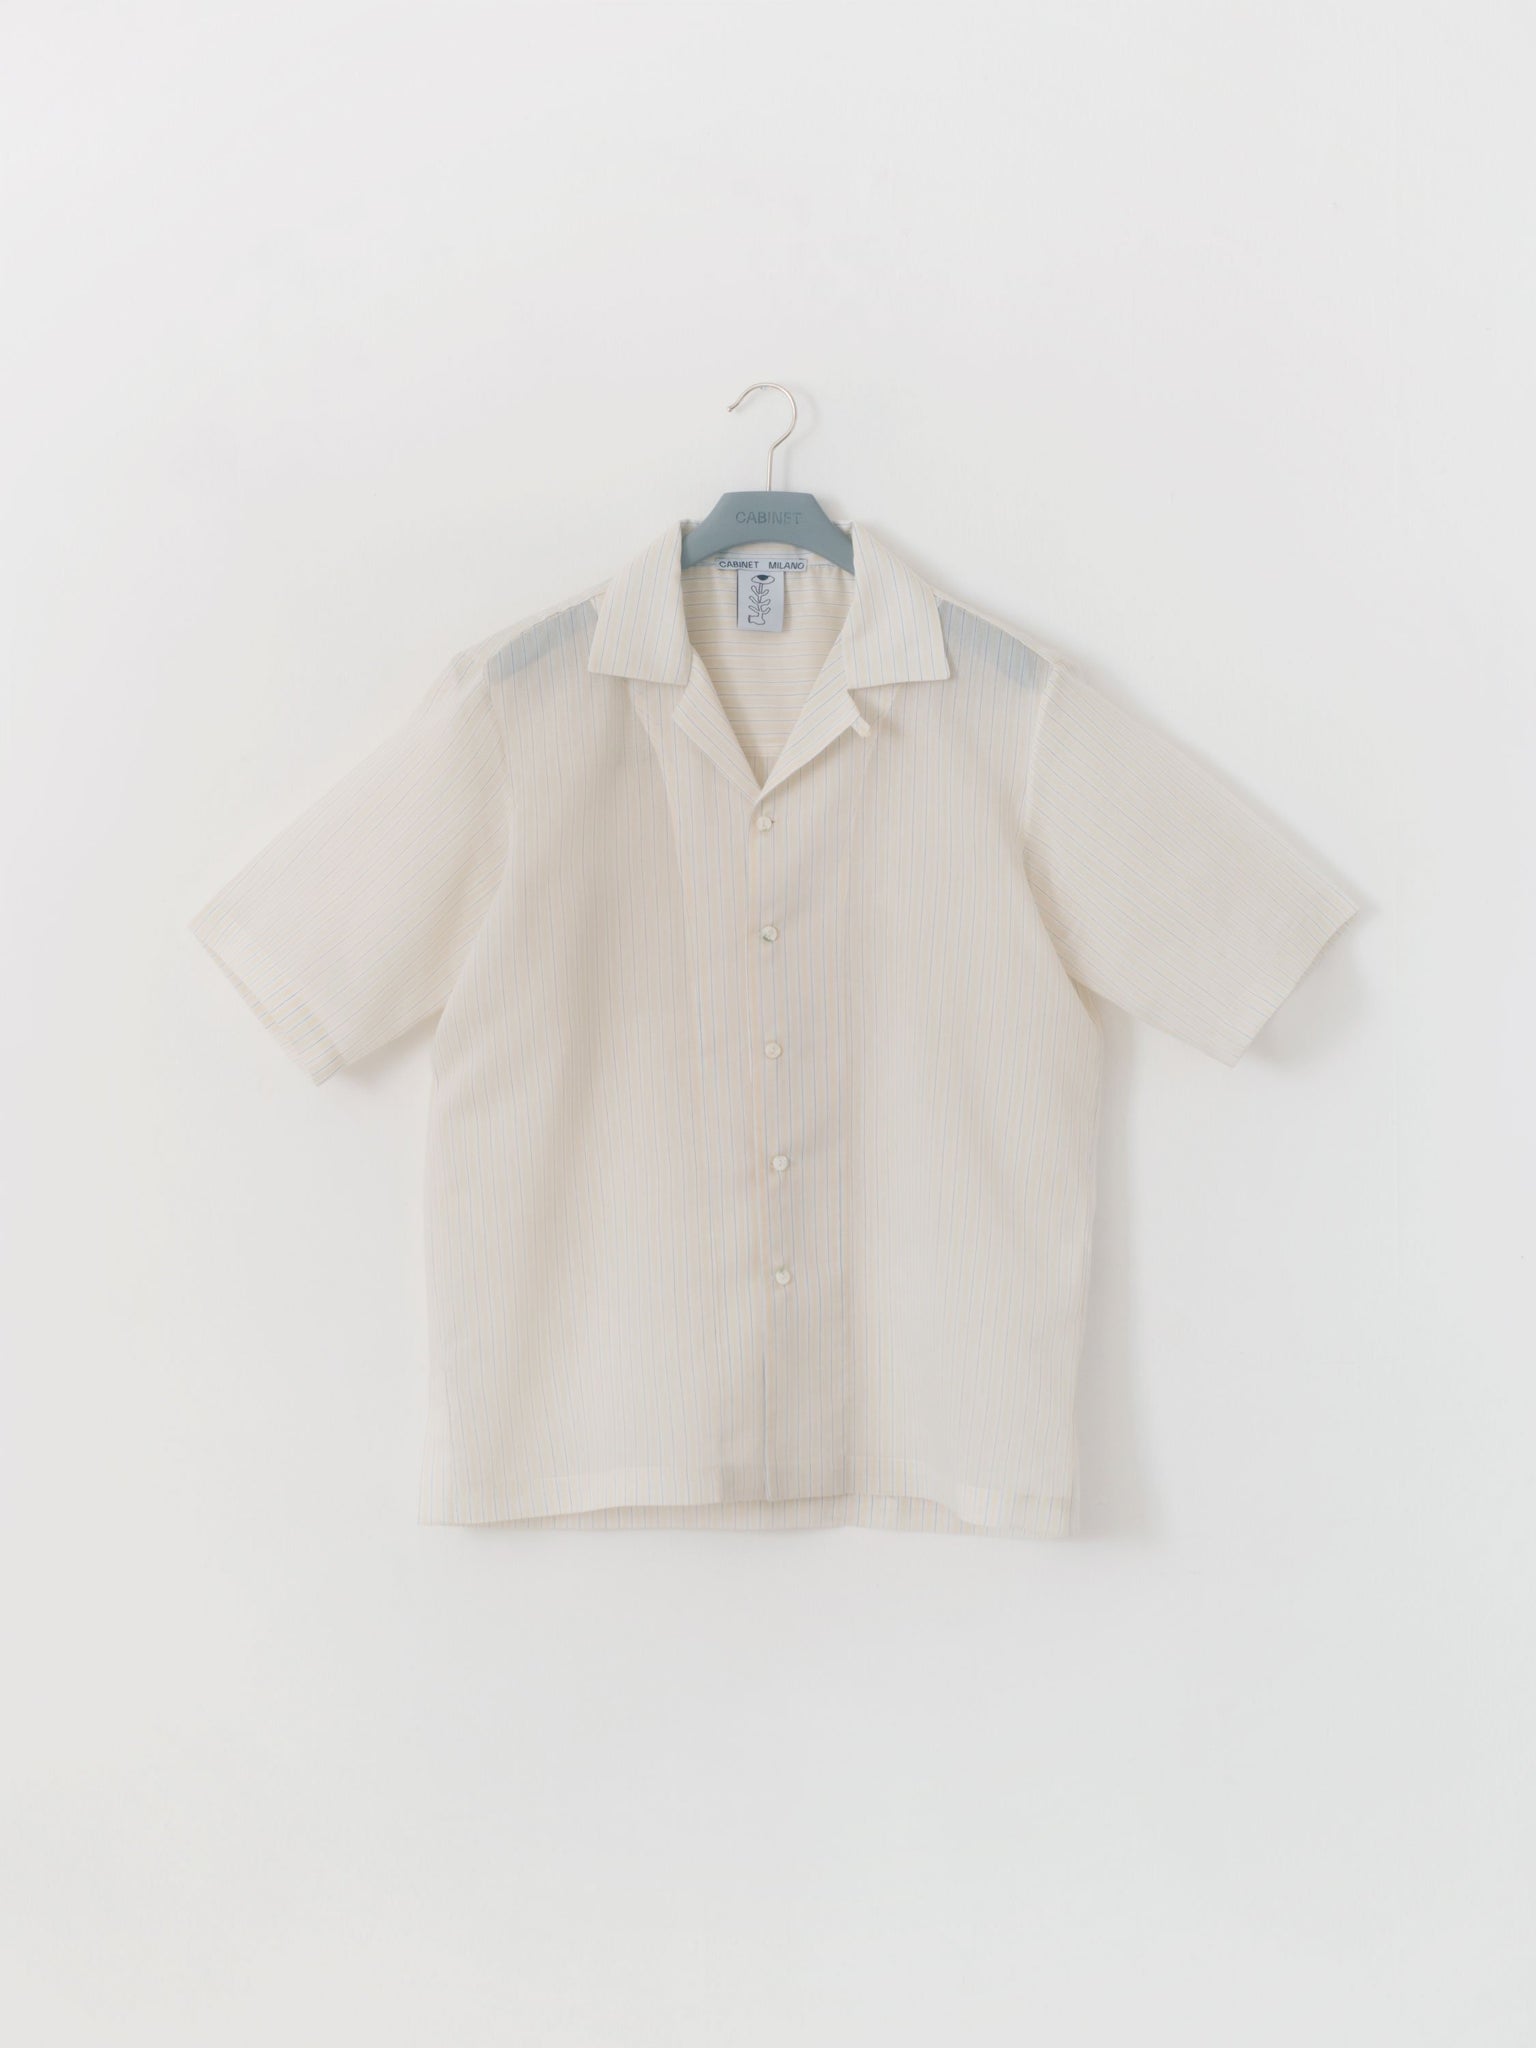 TEL AVIV shirt 461U (Unisex) - PRE-ORDER